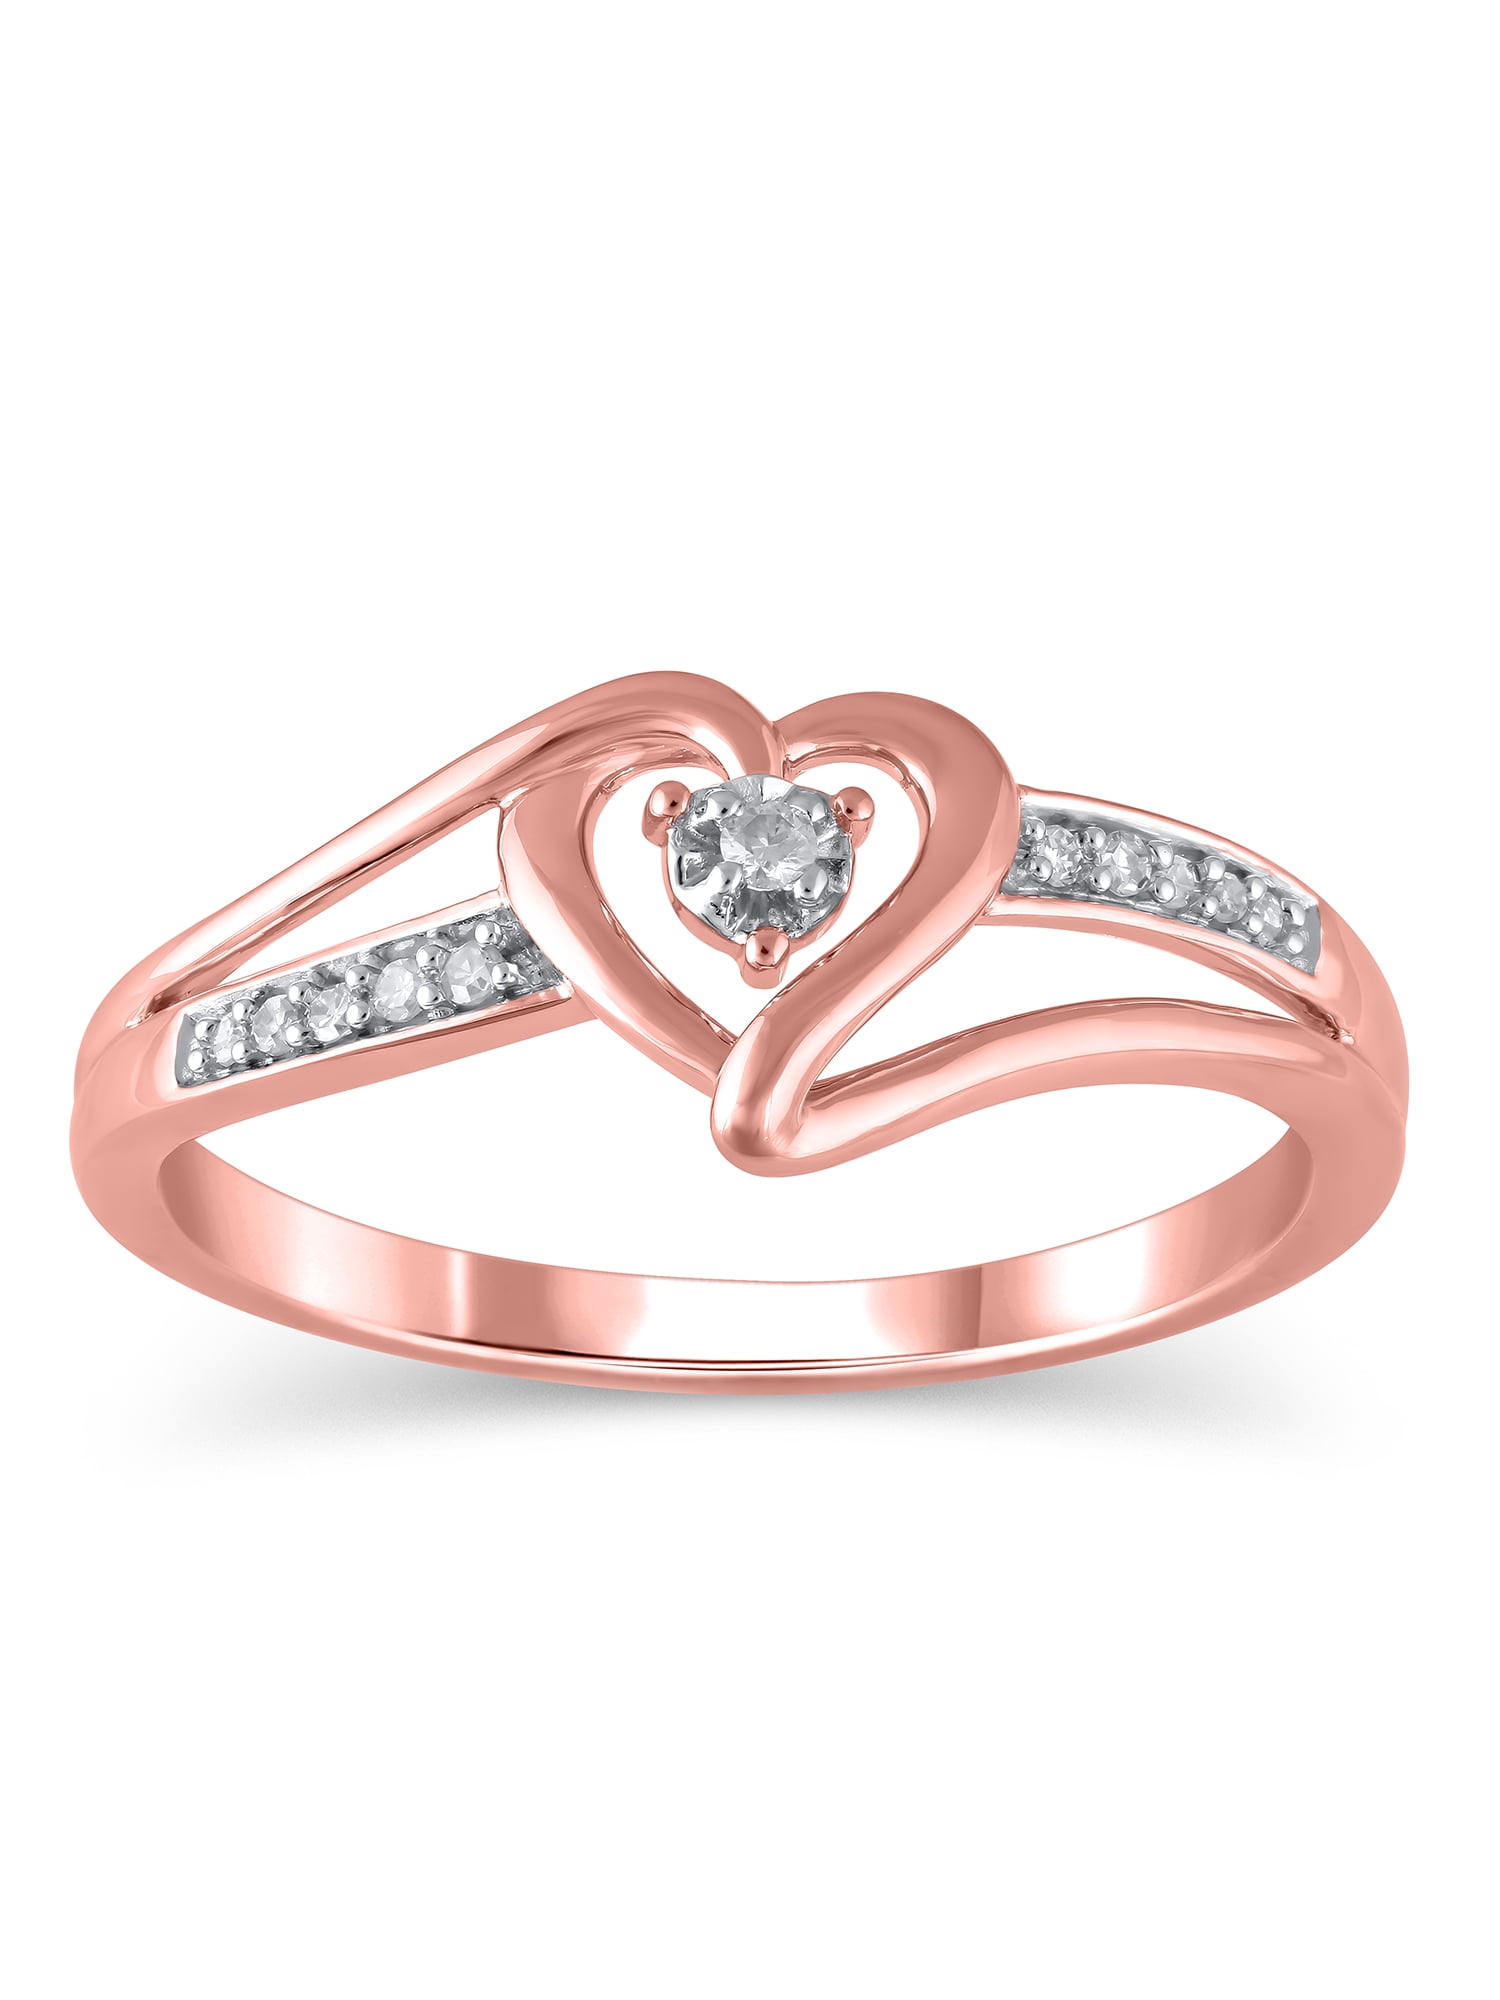 JeenMata 1.25 Carat Round Cut Moissanite Wedding Set - Bridal Set -  Infinity Ring - Forever Ring - Promise Ring - 18k Rose Gold Over Silver -  Walmart.com